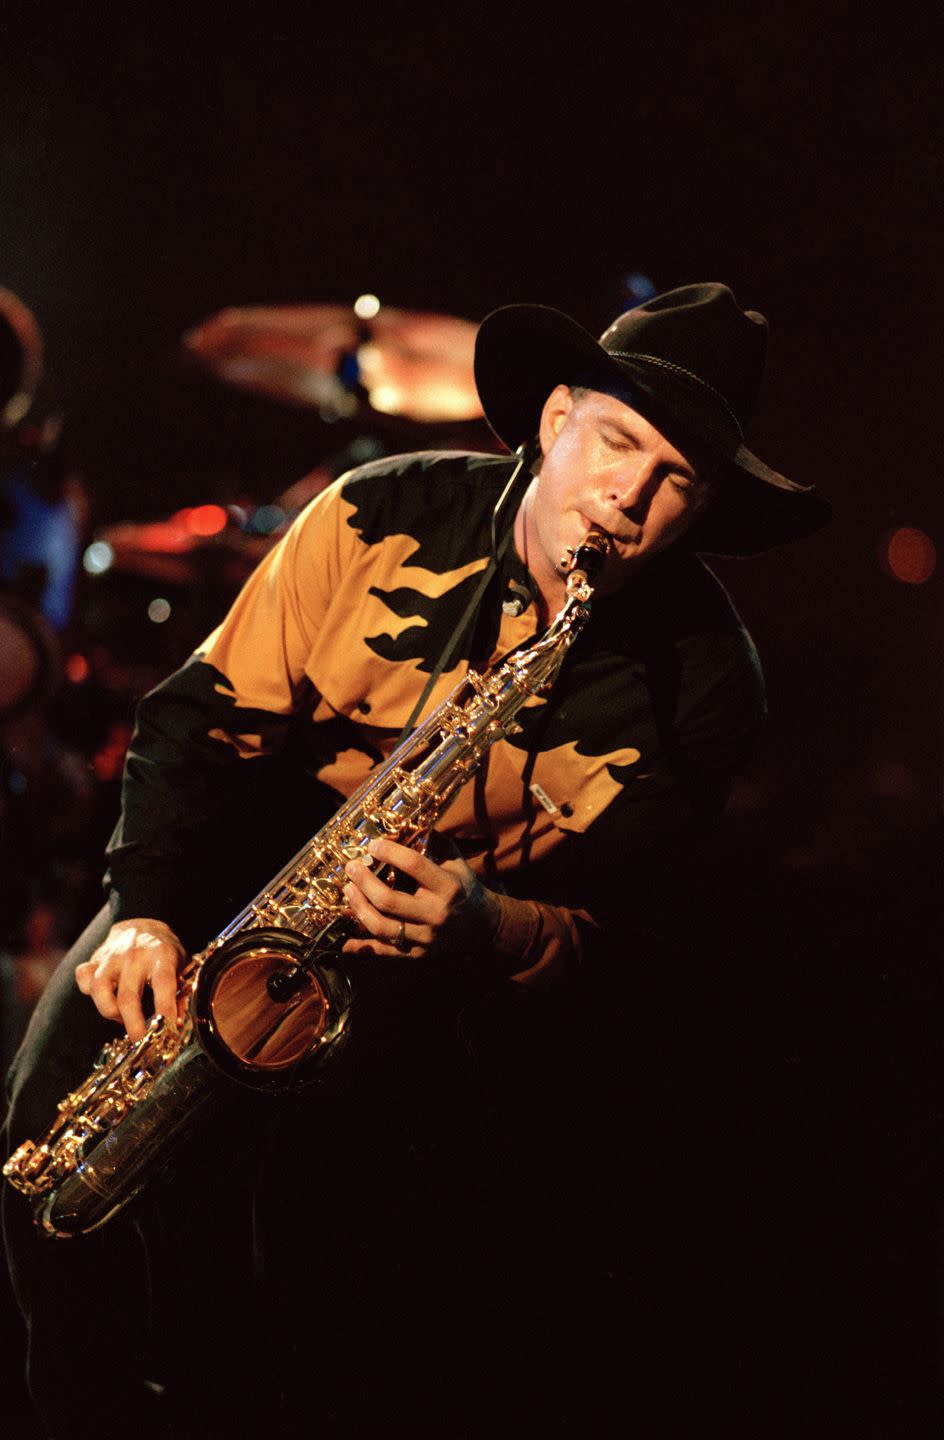 1) When Garth Brooks played the saxophone.